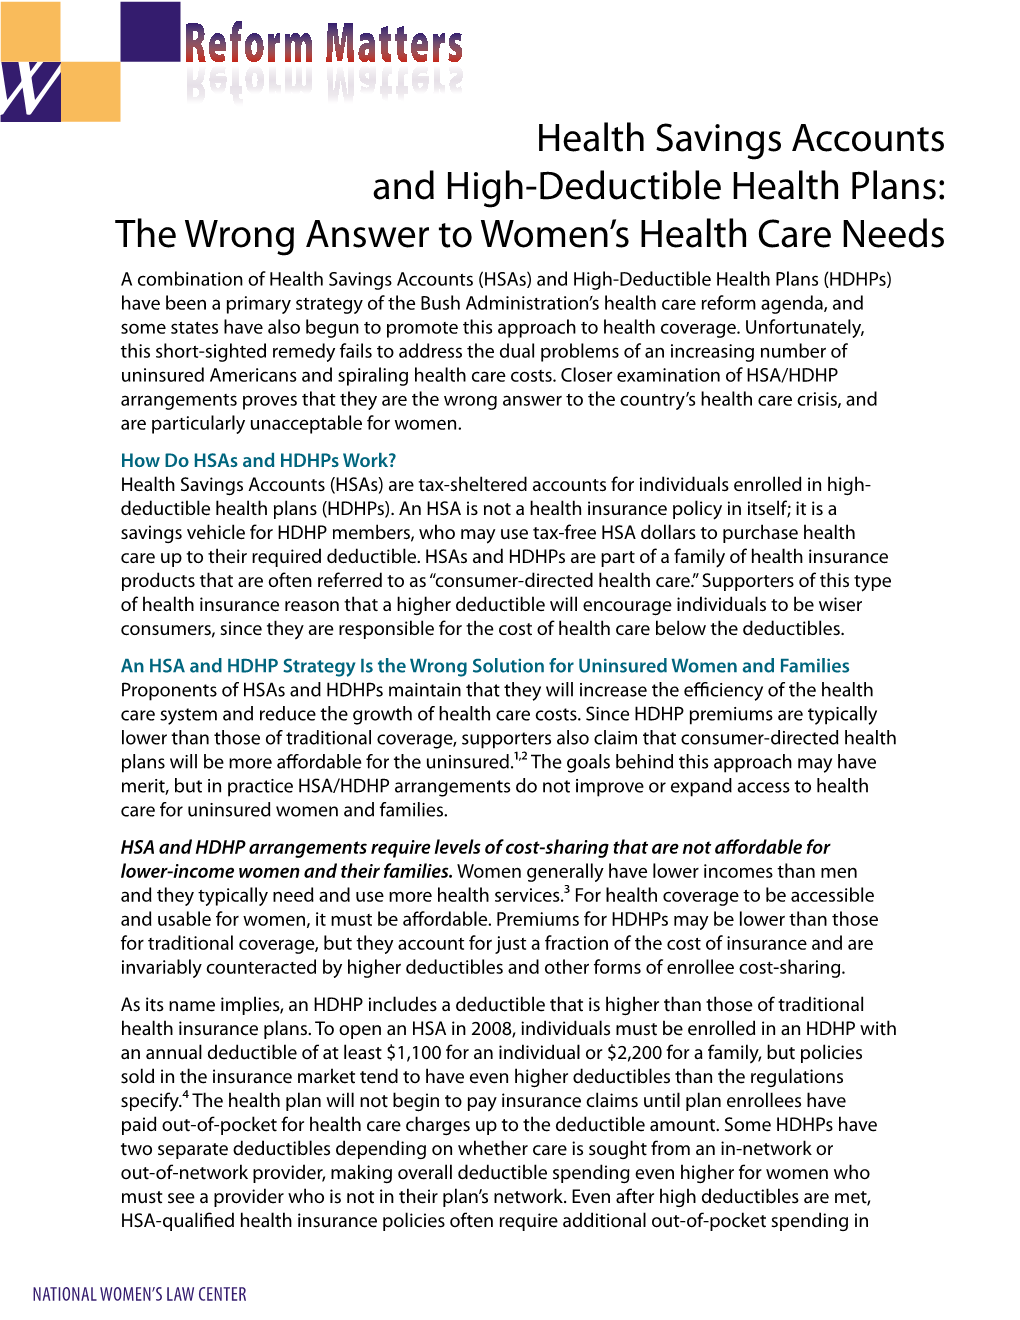 Health Savings Accounts and High-Deductible Health Plans